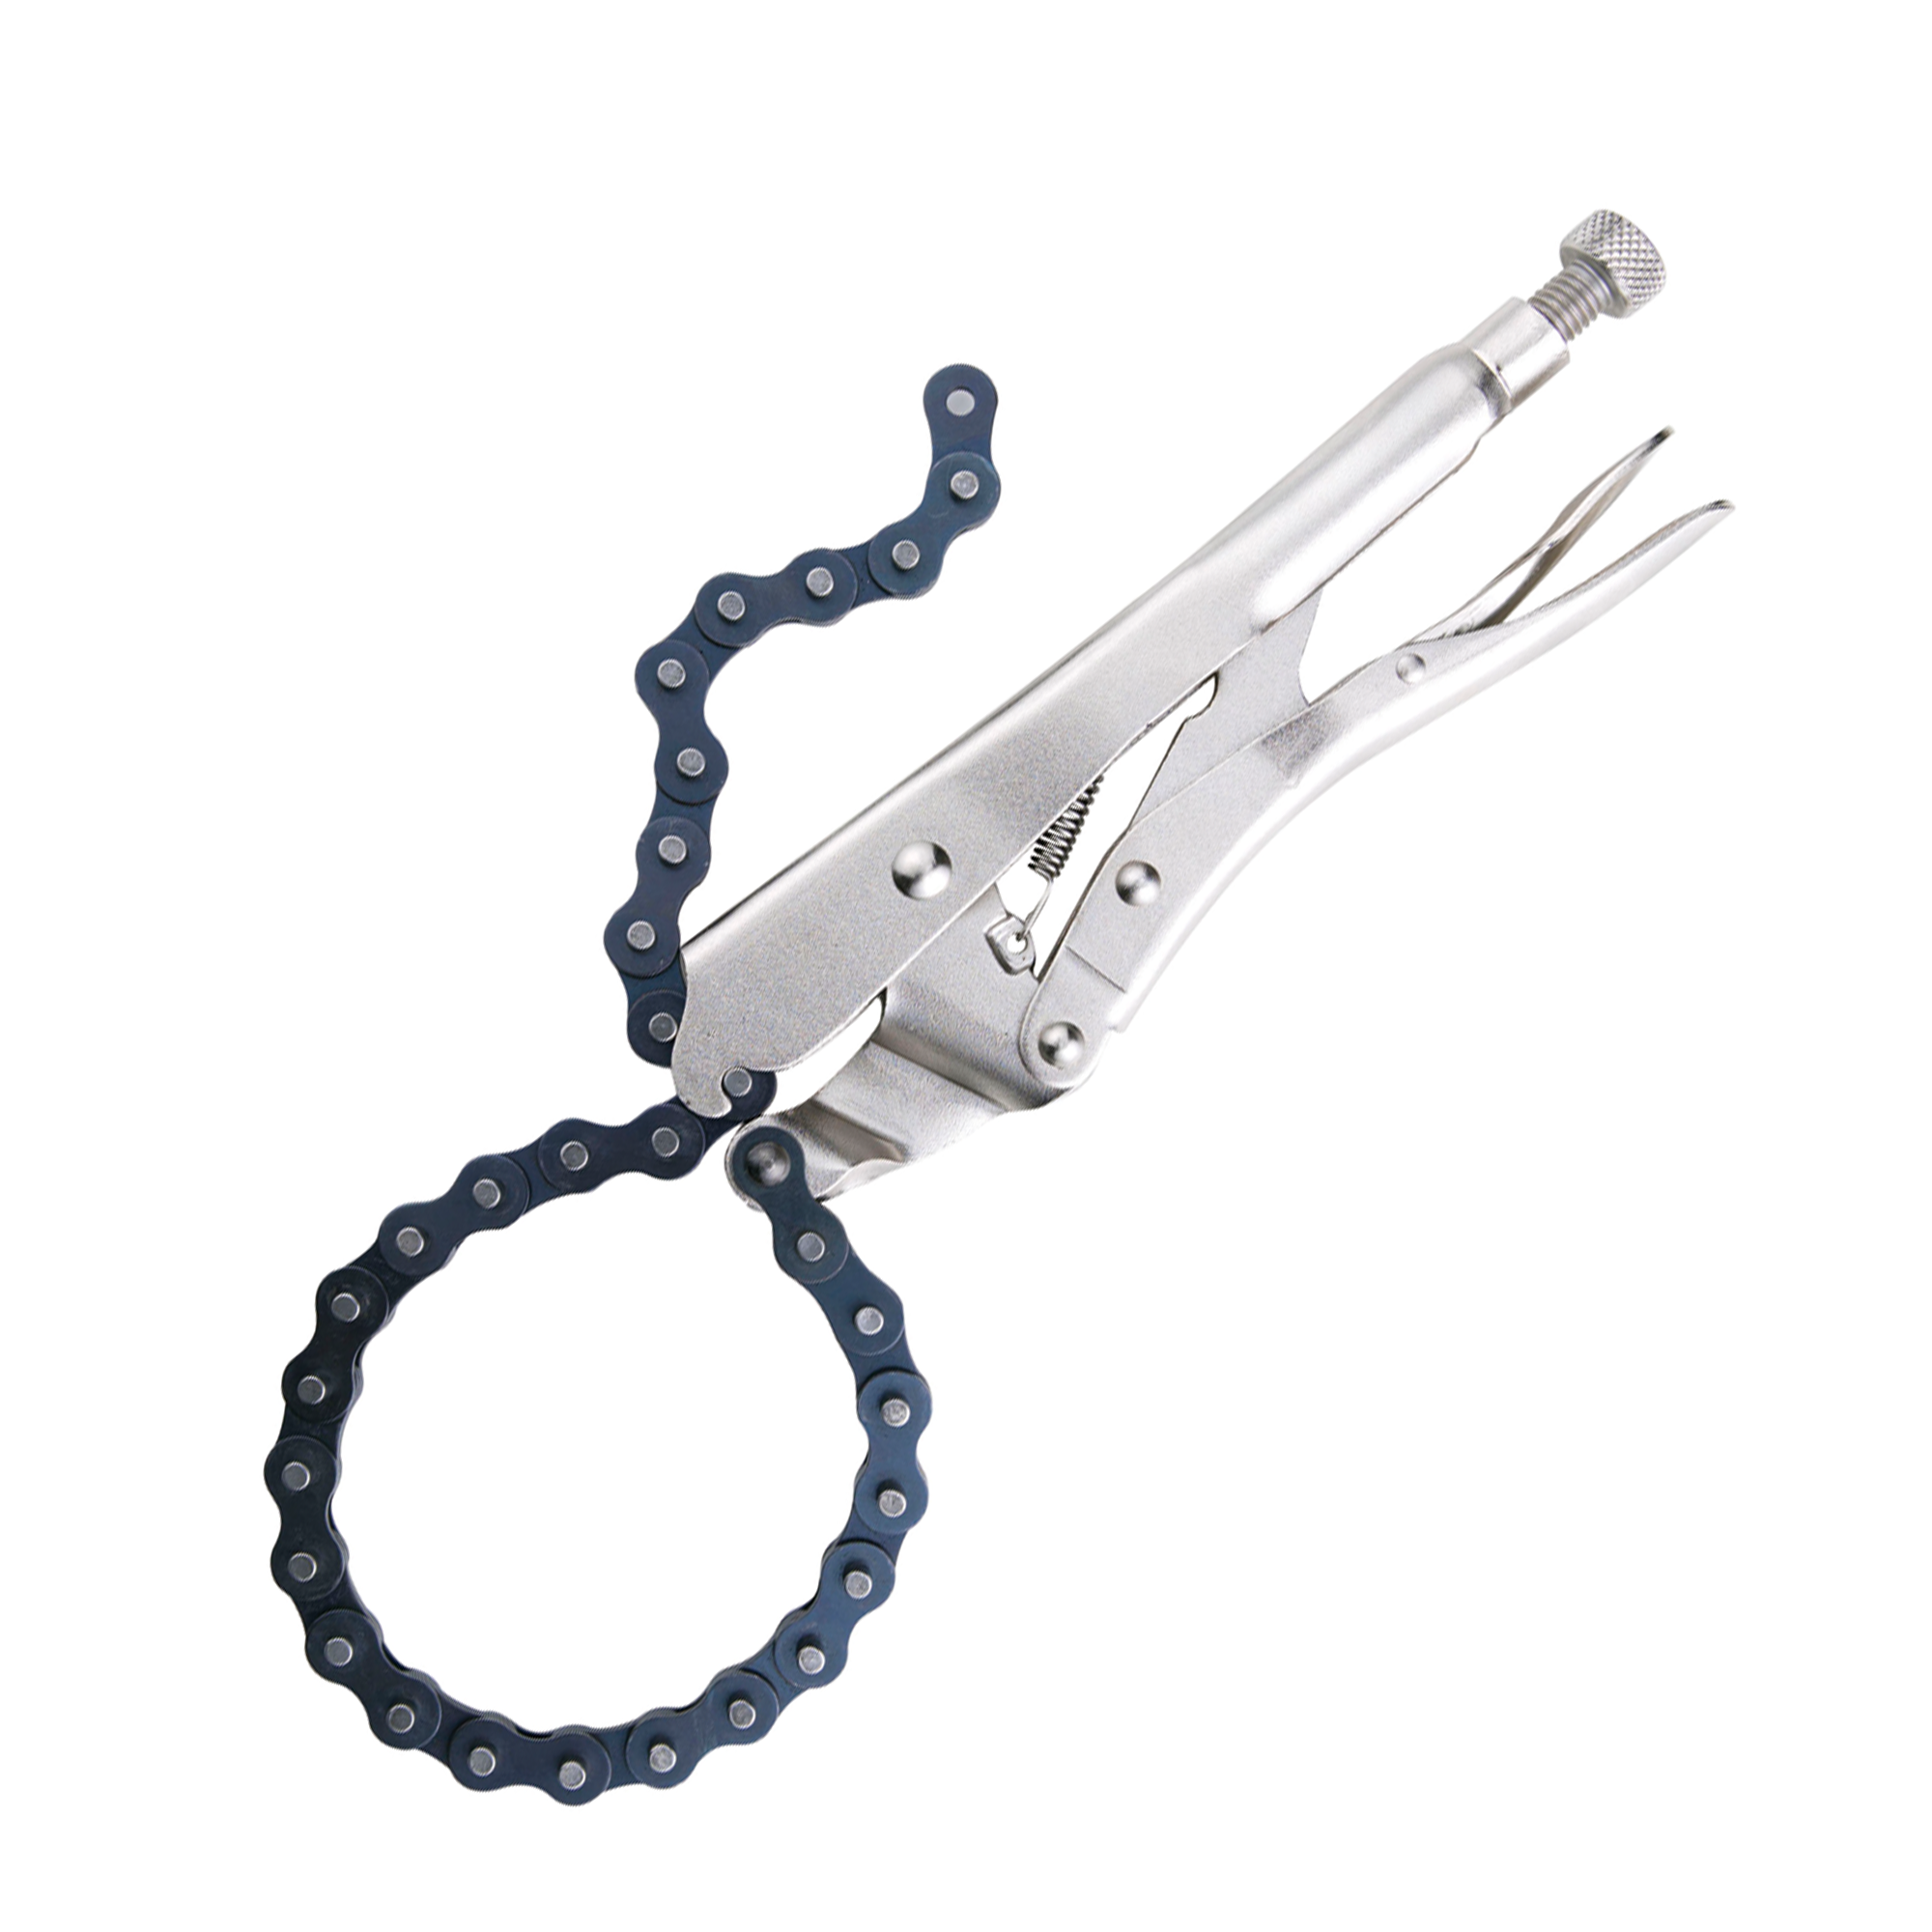 Chain Clamp Locking Plier EC-E20R by Eclipse